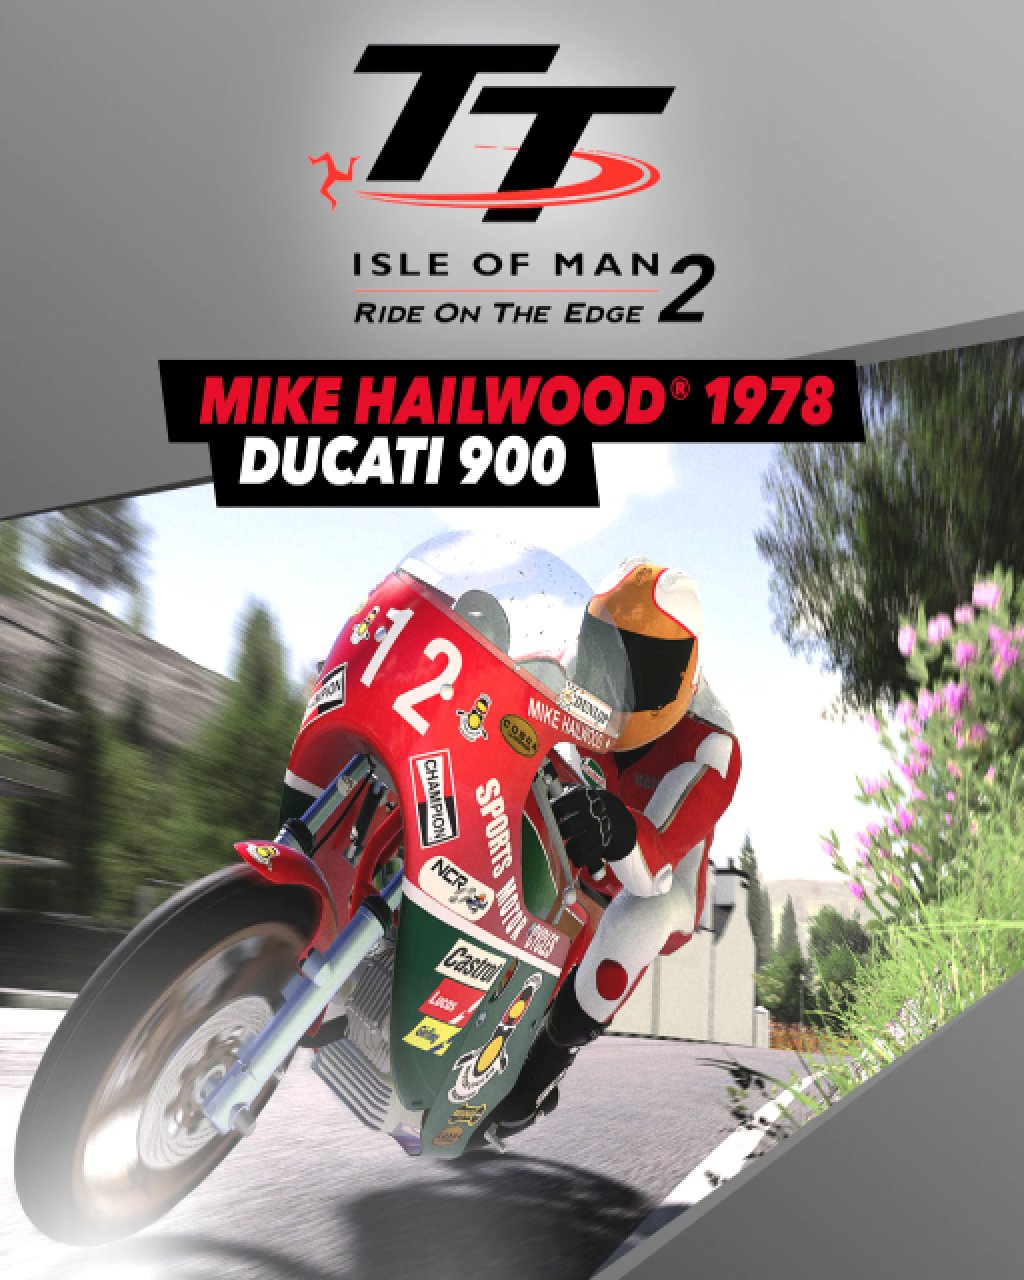 TT Isle of Man 2 Ducati 900 Mike Hailwood 1978